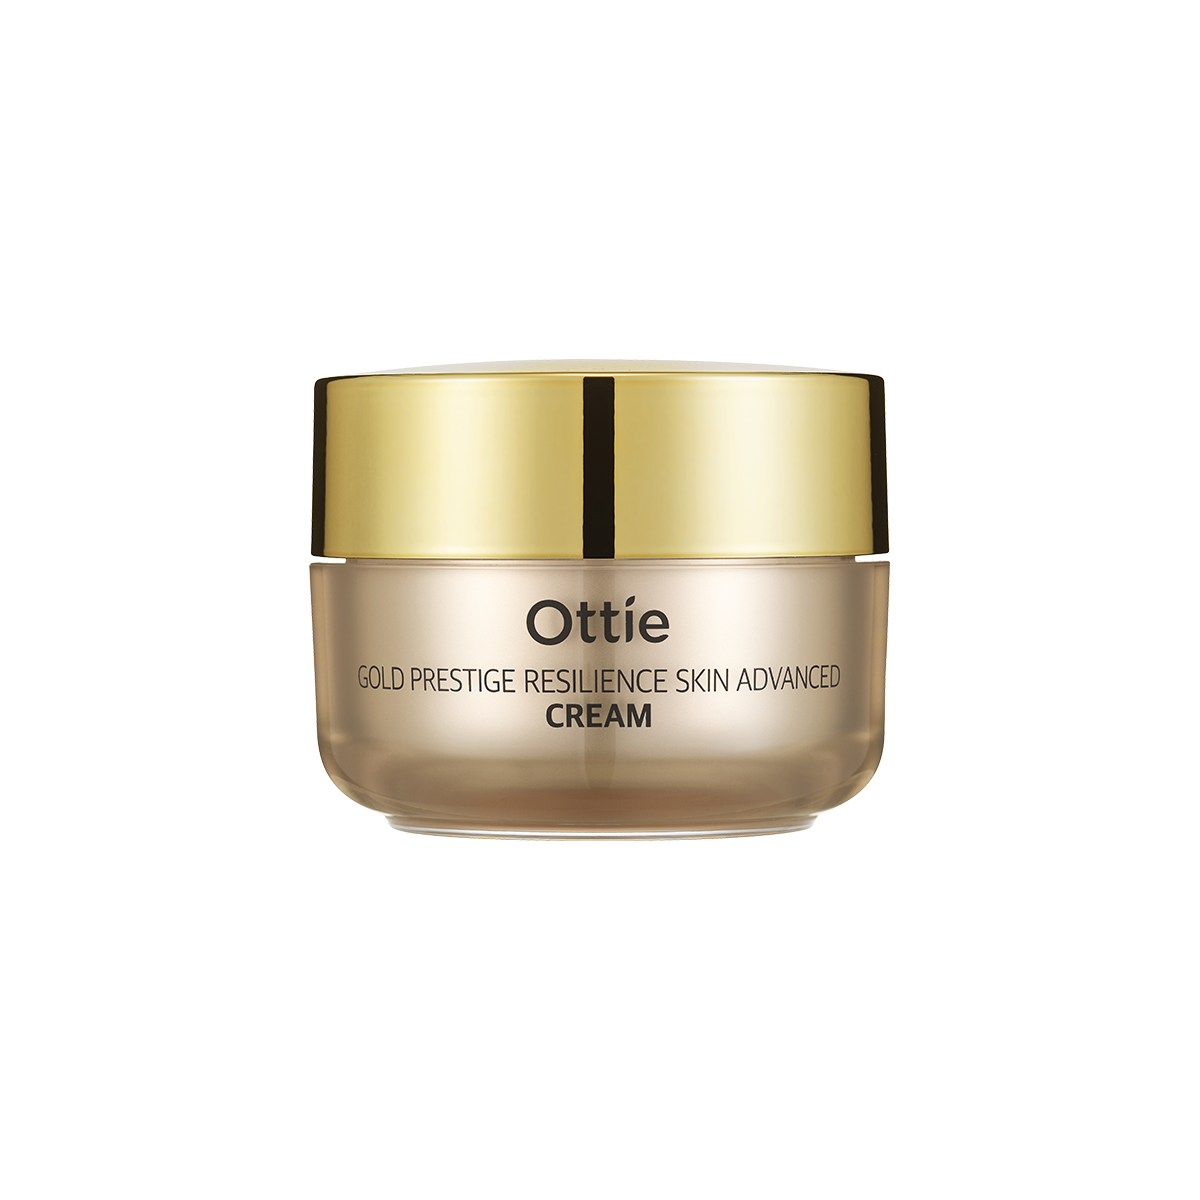 Kem trị nám tàn nhang Ottie Gold Prestige Resilience Skin Advance Cream